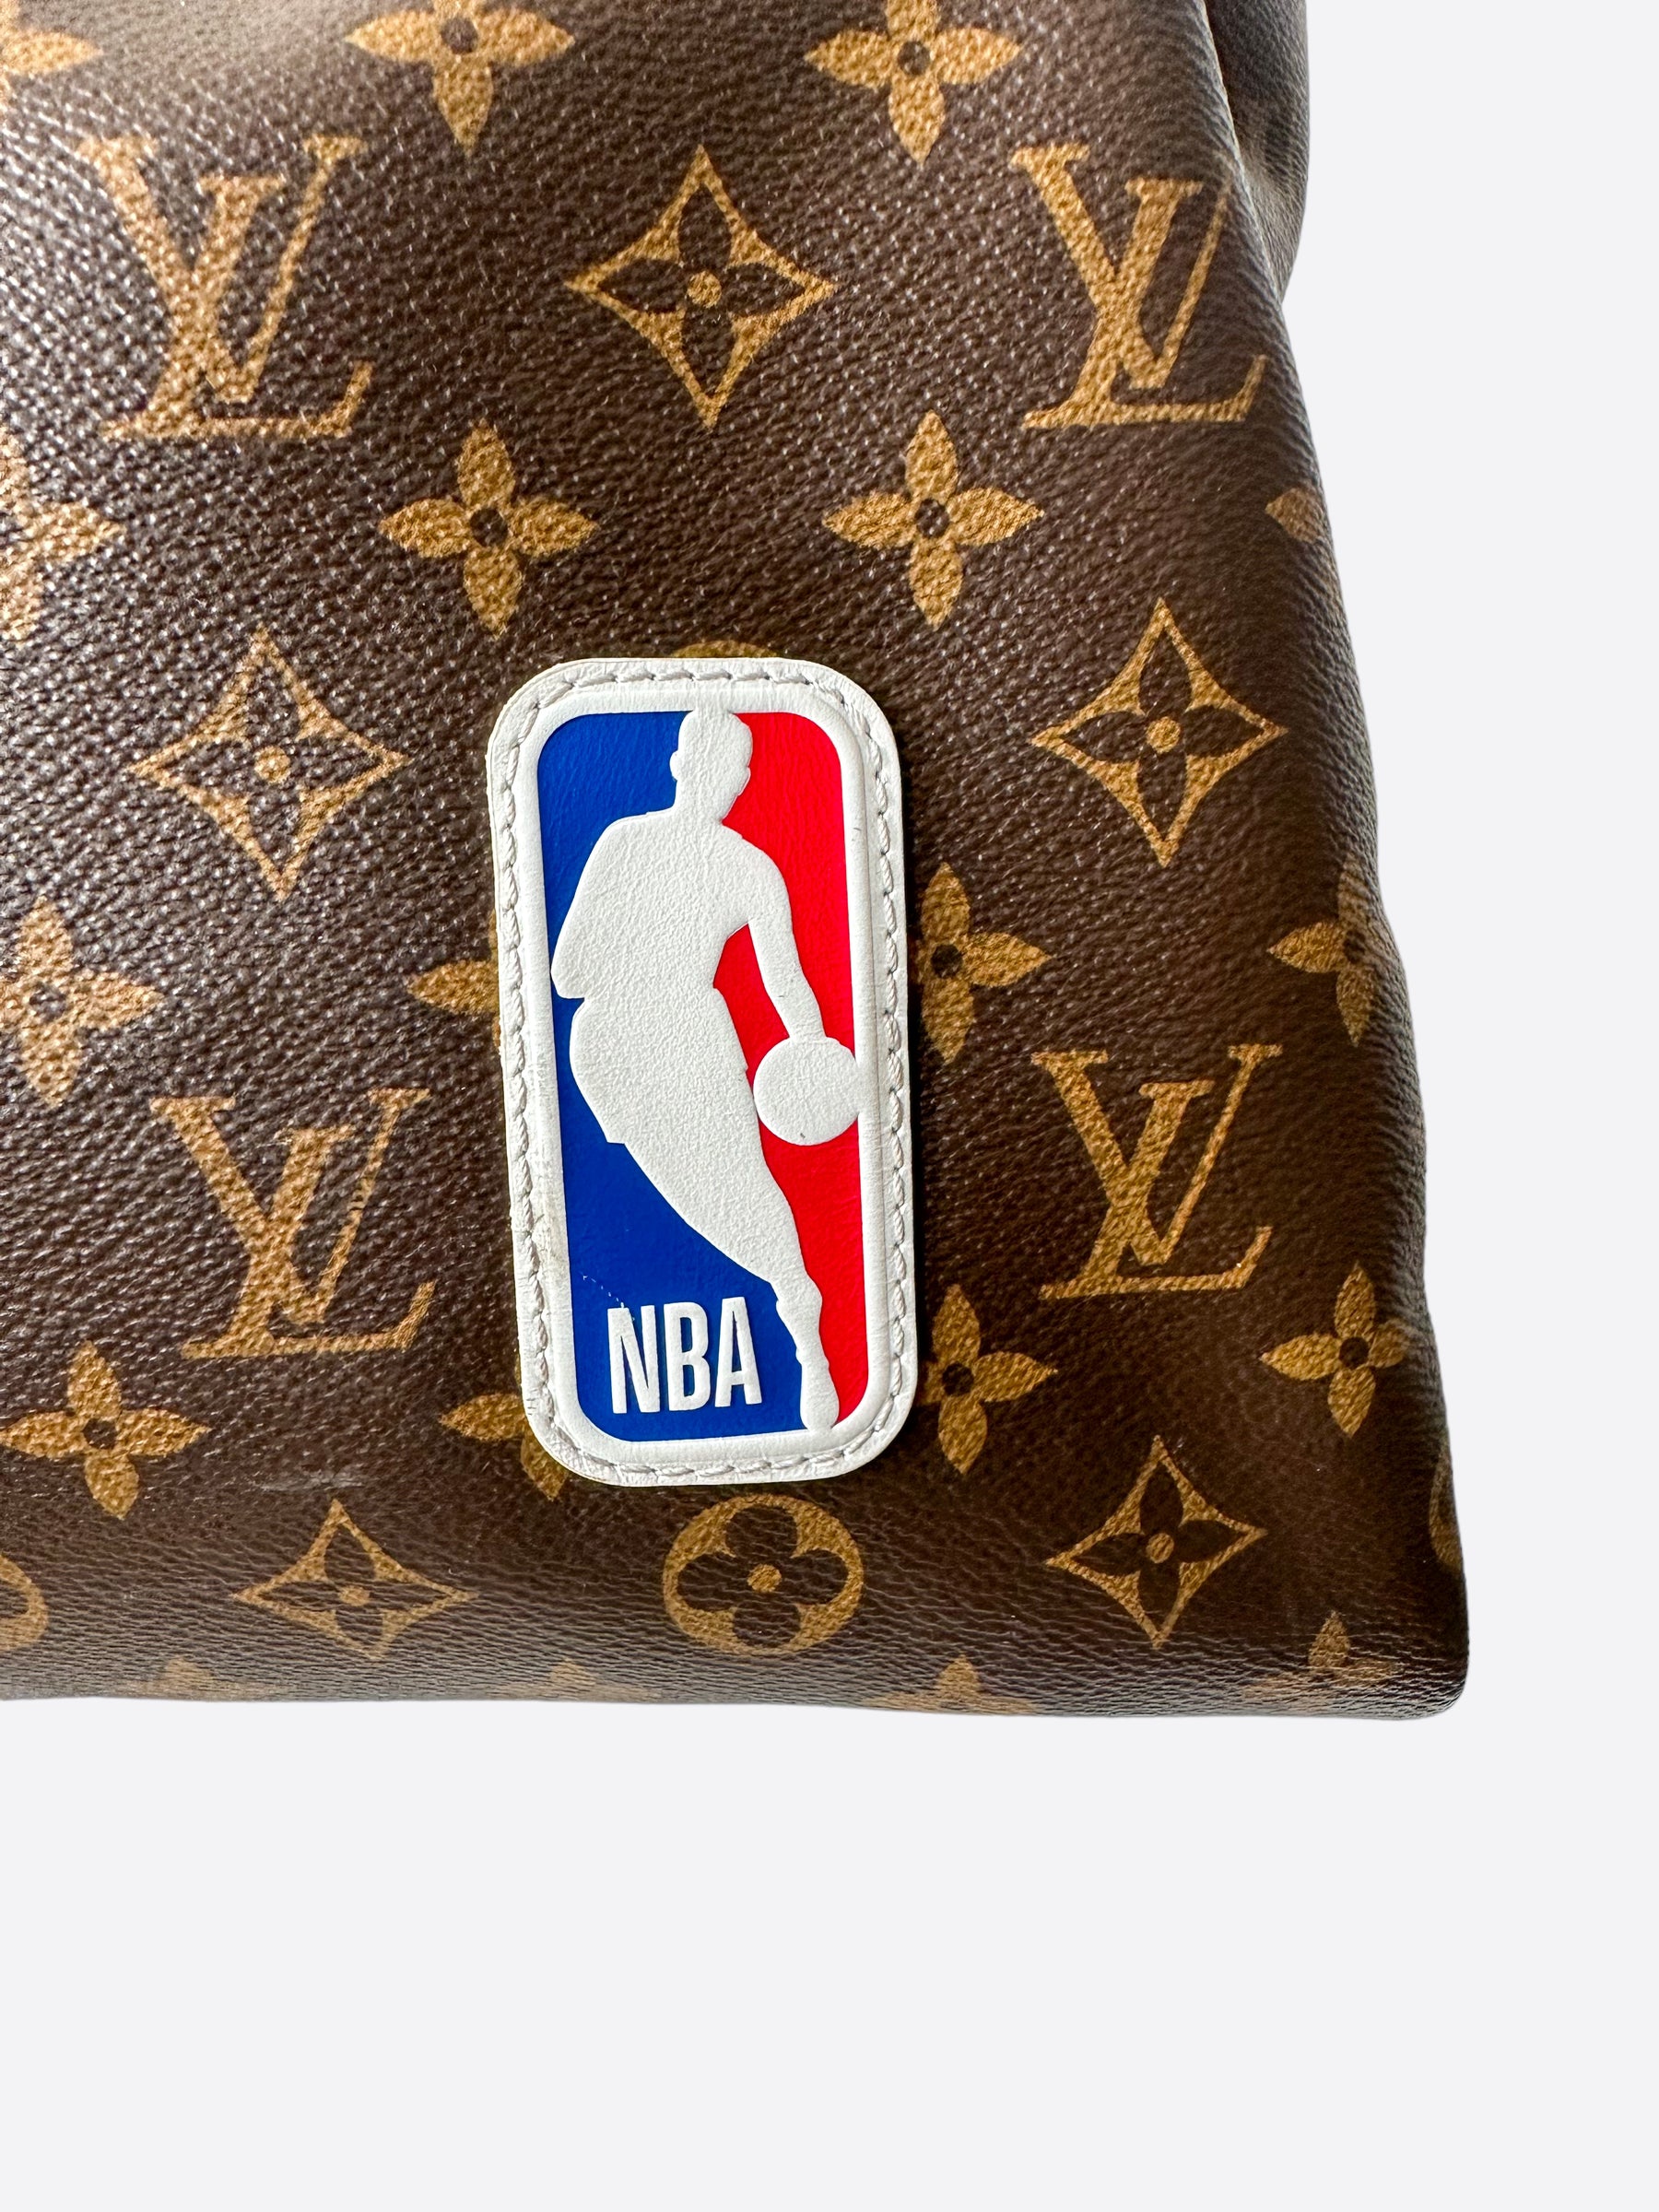 New in box Louis Vuitton NBA Monogram Pocket Organizer